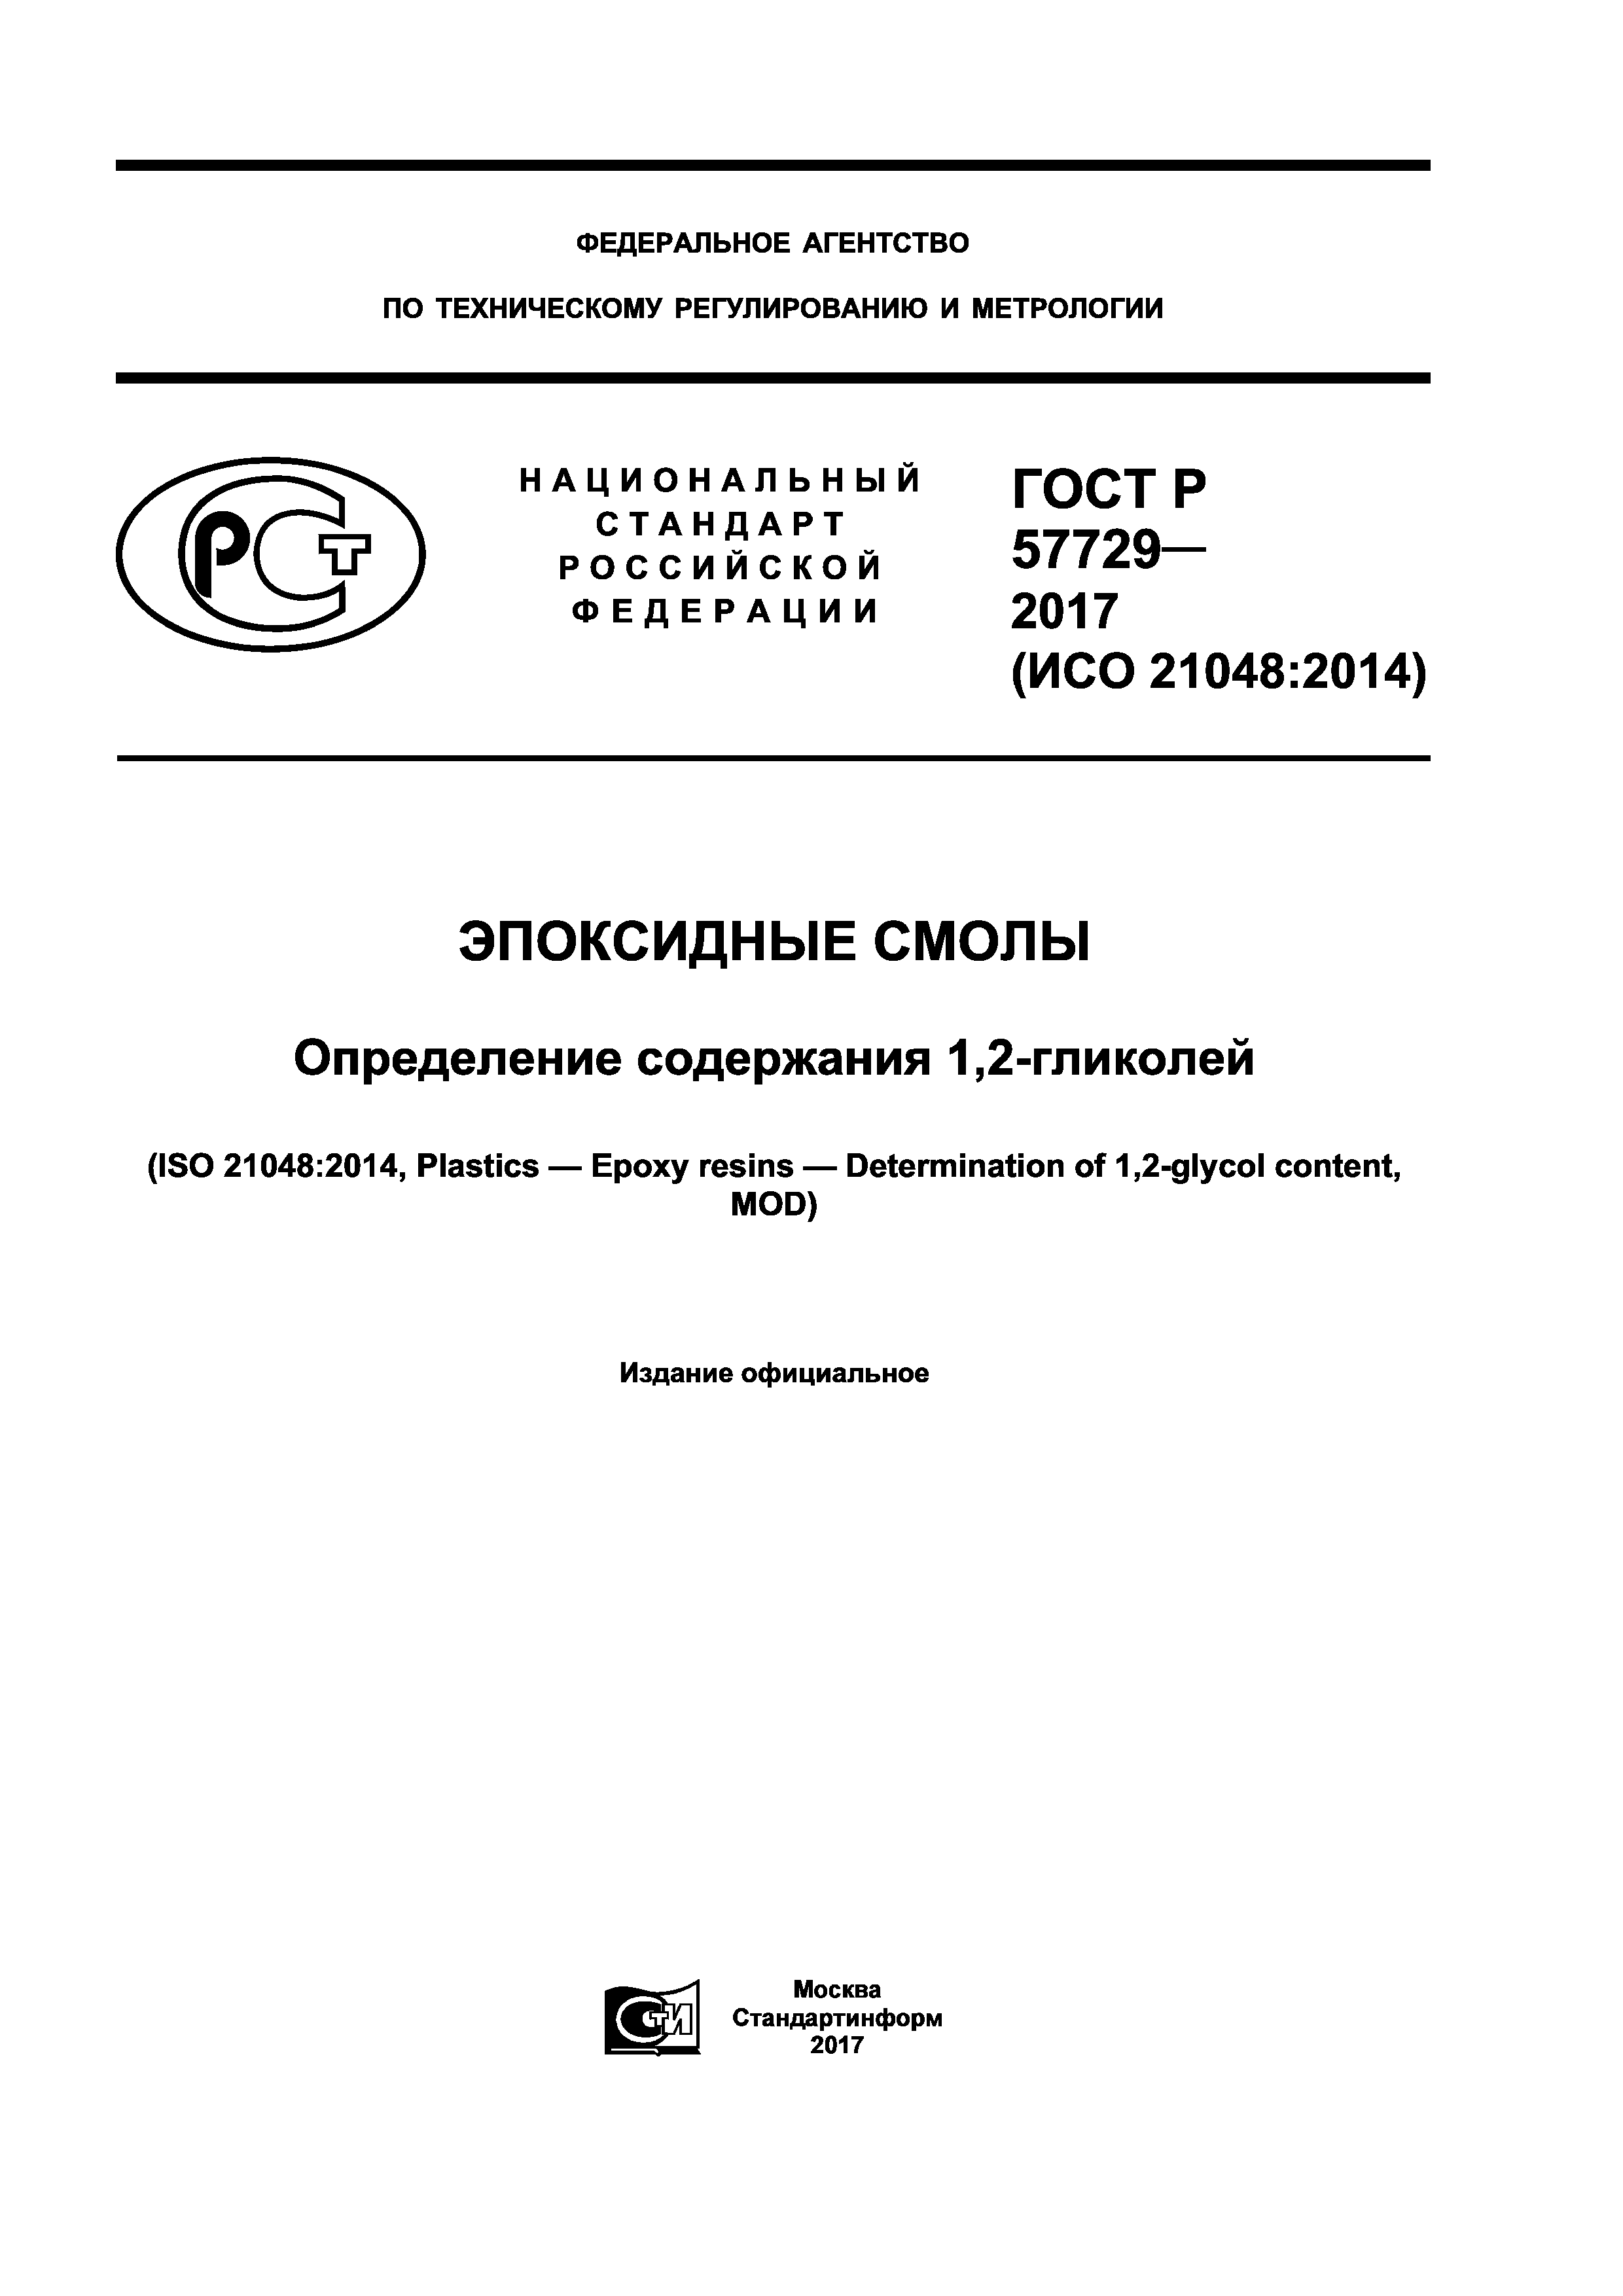 ГОСТ Р 57729-2017